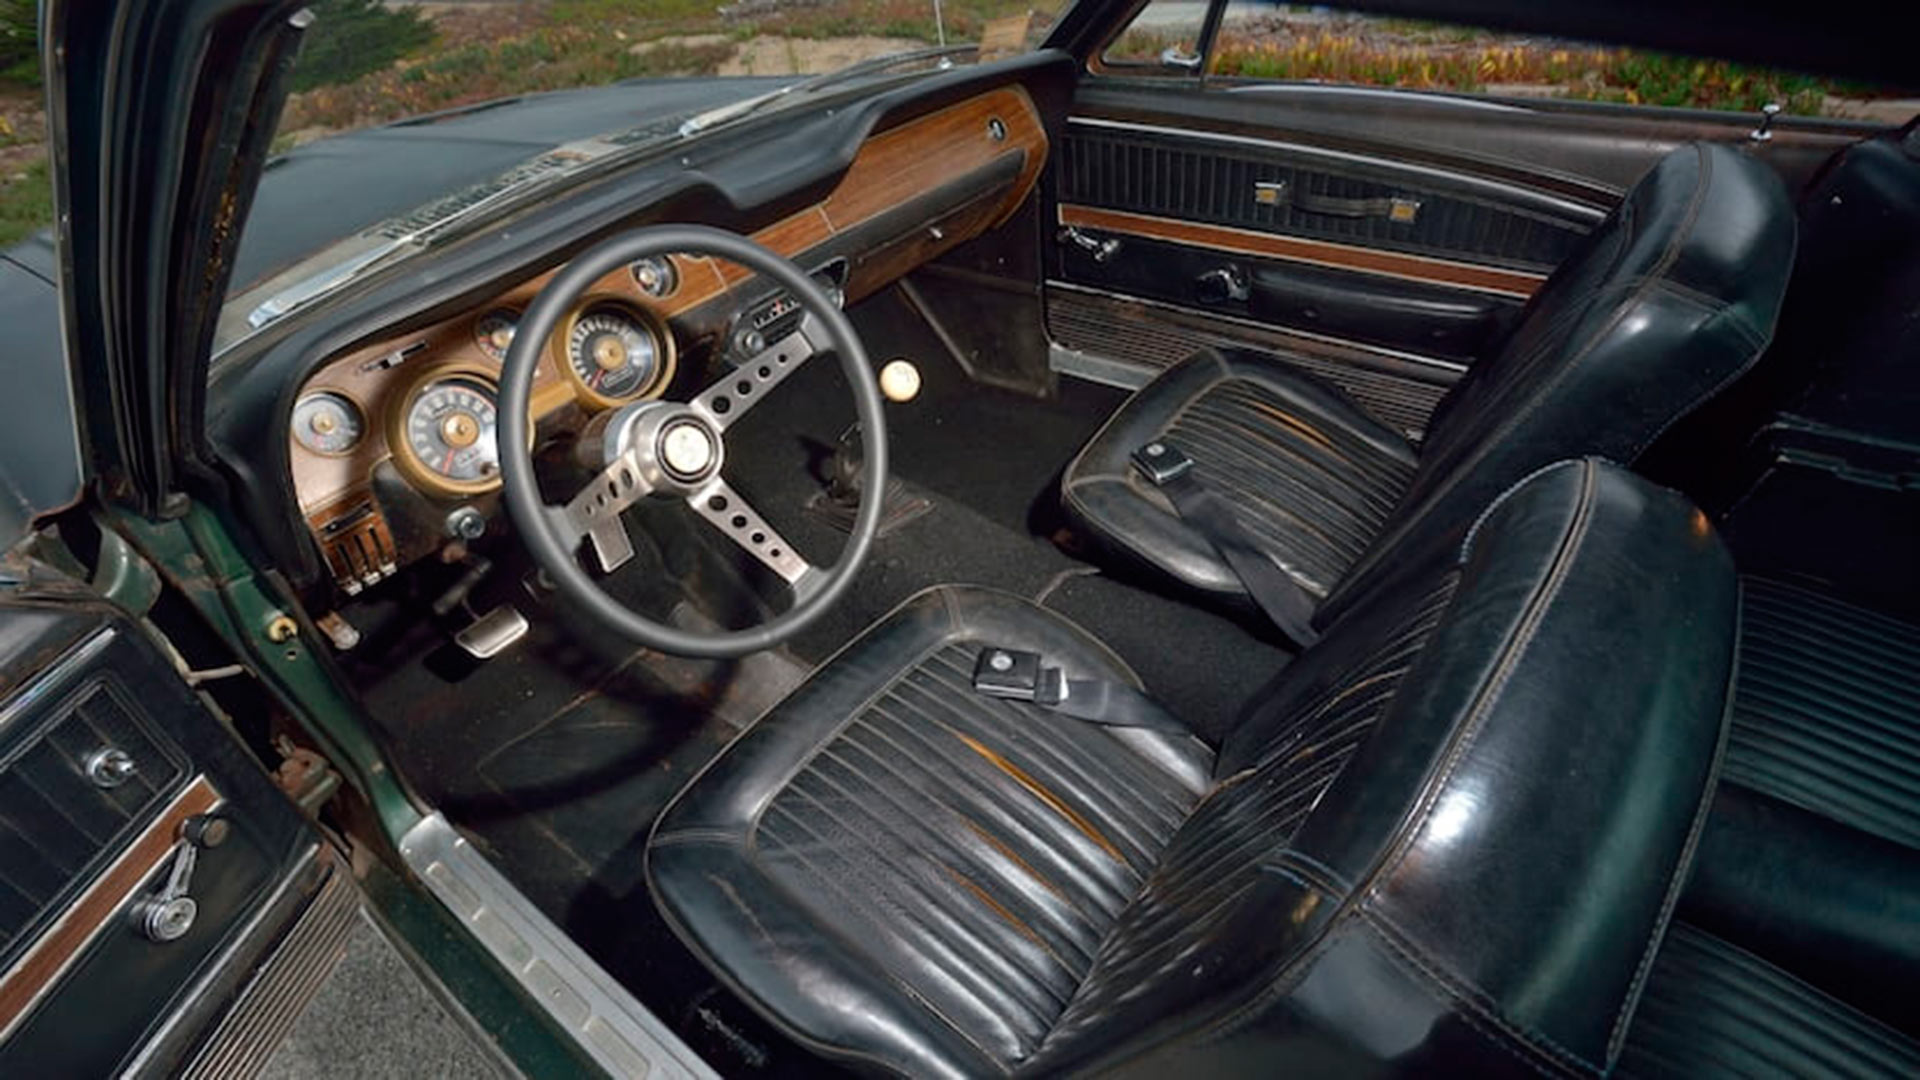 Original Bullitt Mustang sells at Mecum Auction